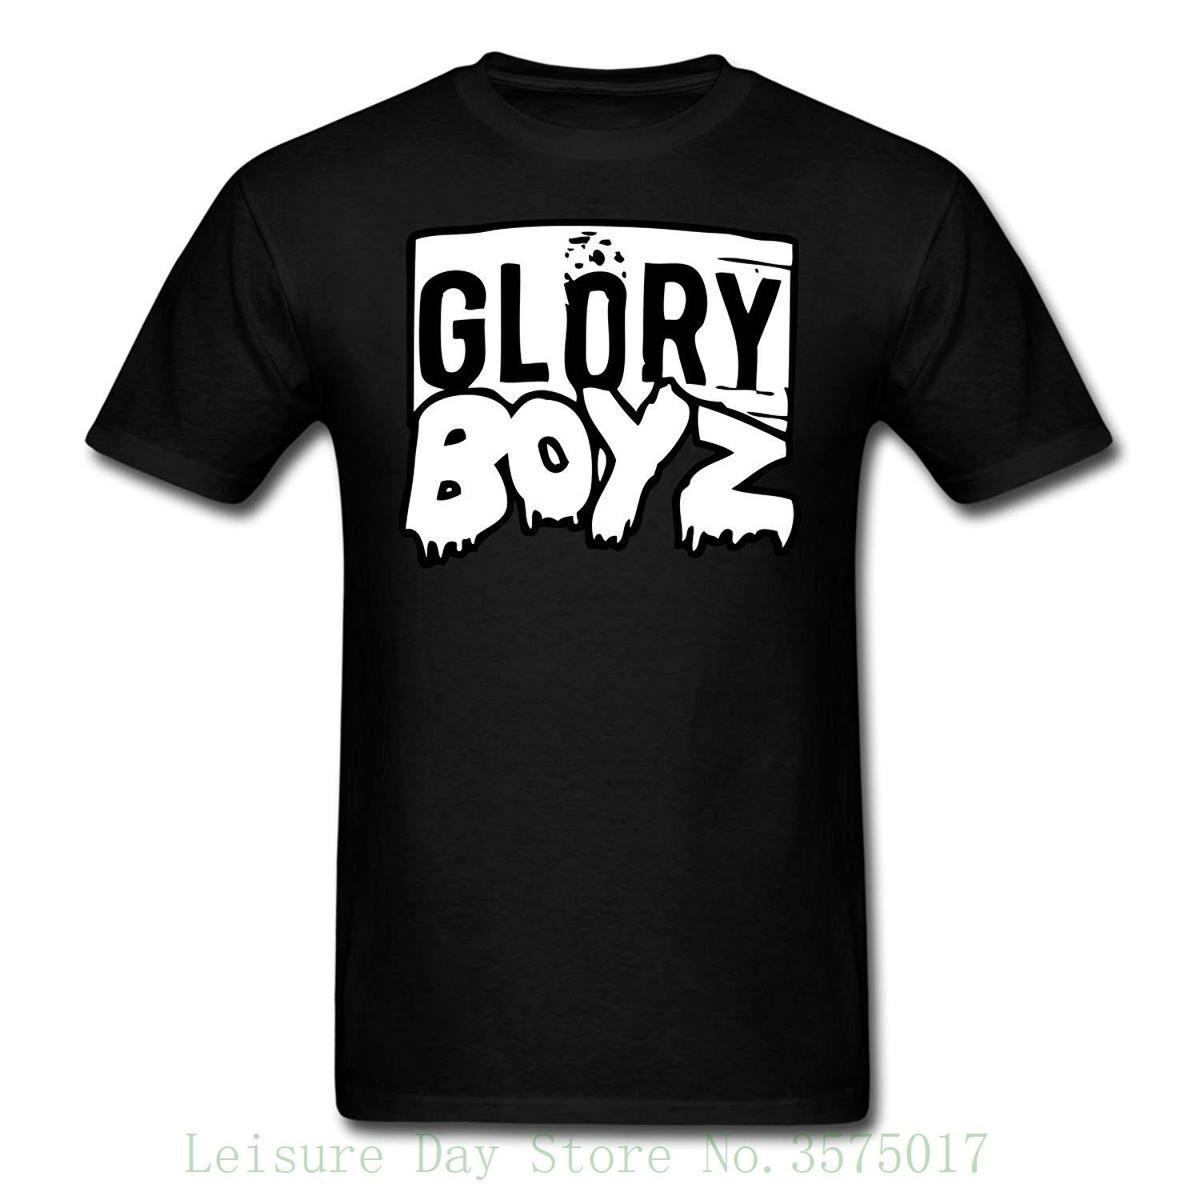 Cool MP Logo - Glory Boyz Gbe Logo Mp Men'S T Shirt Good Quality Brand Cotton Shirt